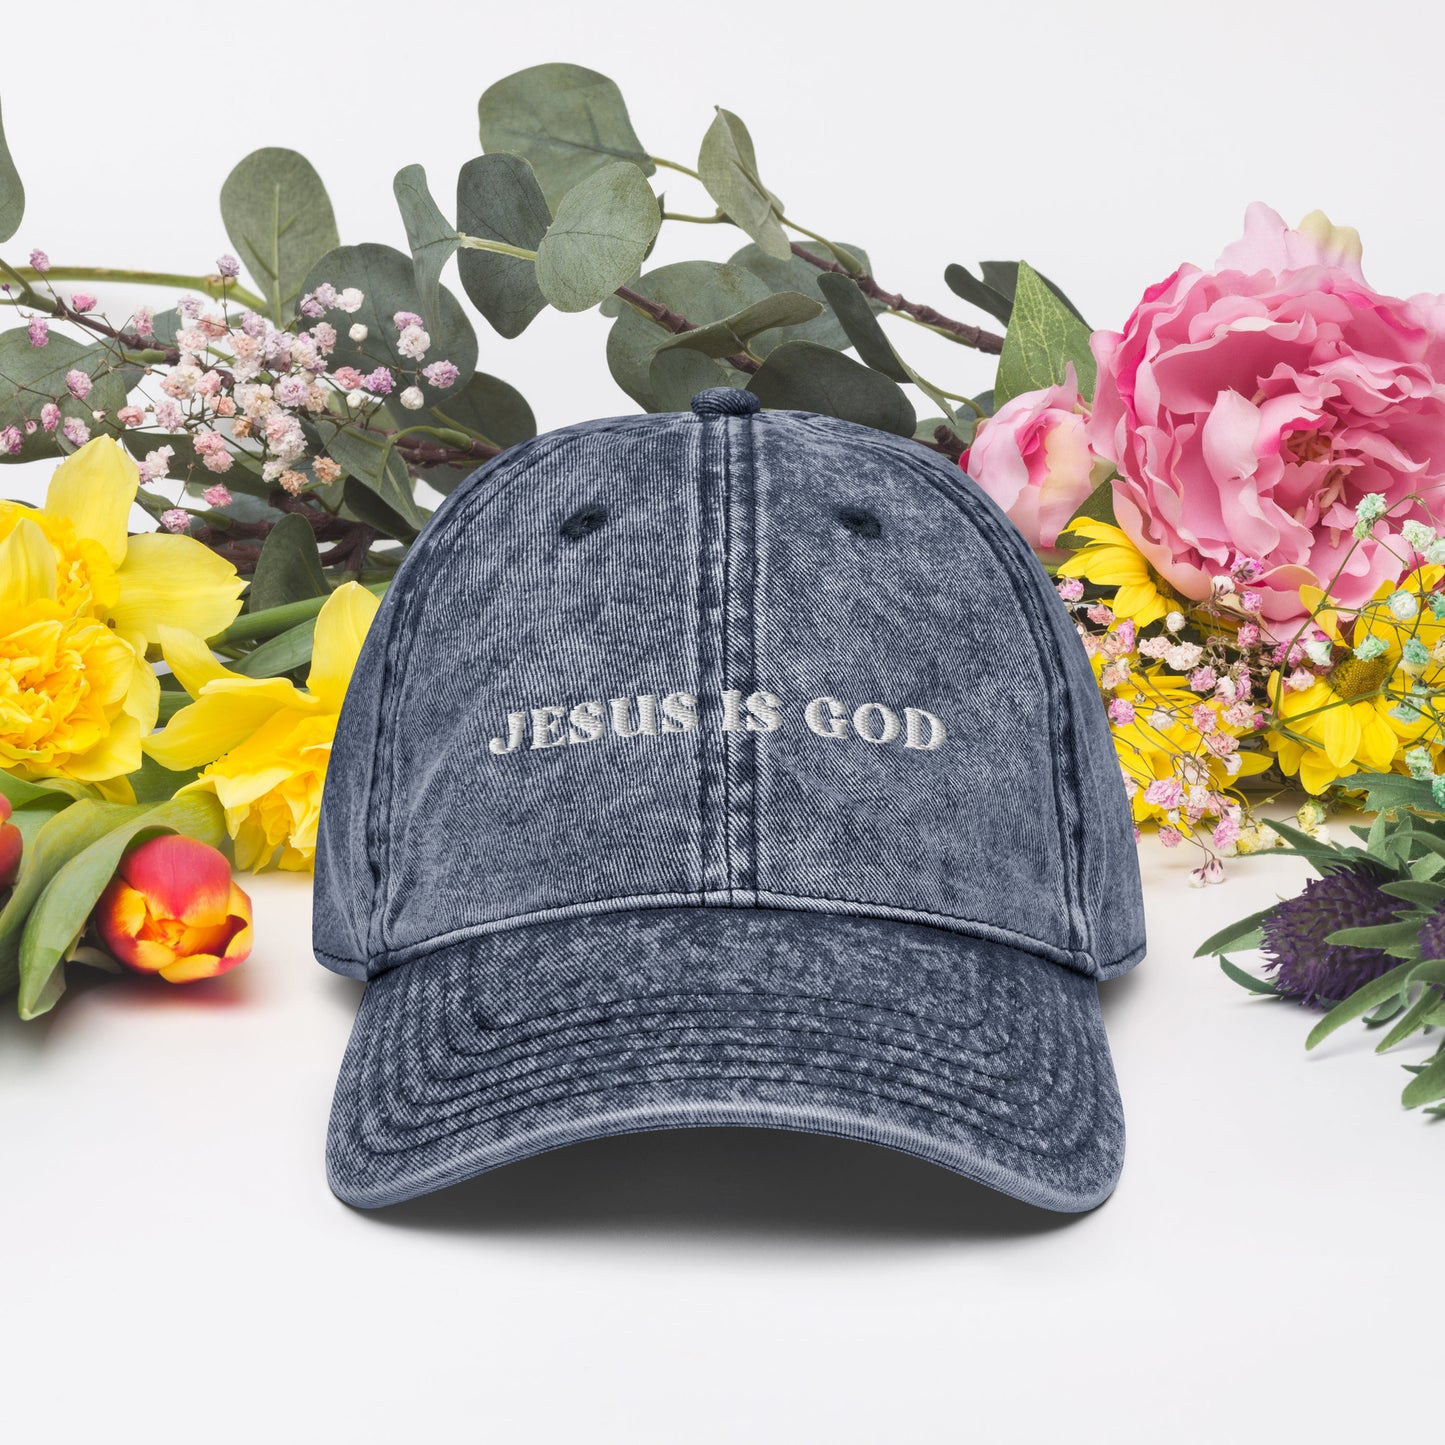 Jesus is God - Cotton Twill Hat